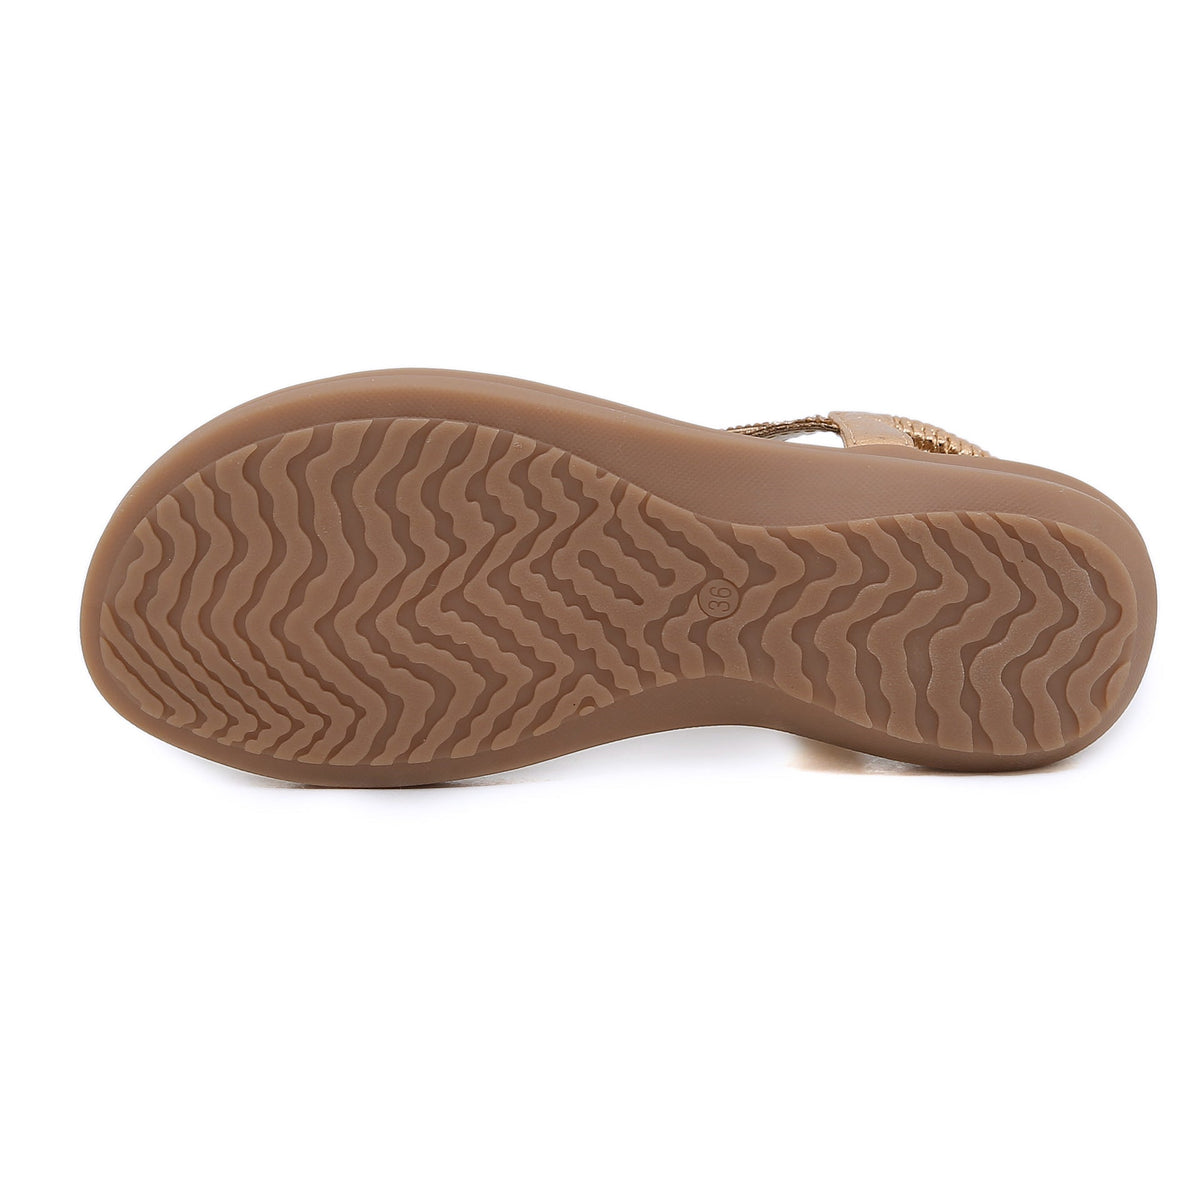 Belifi Flat Bottom Comfort Value Large Beach Sandals